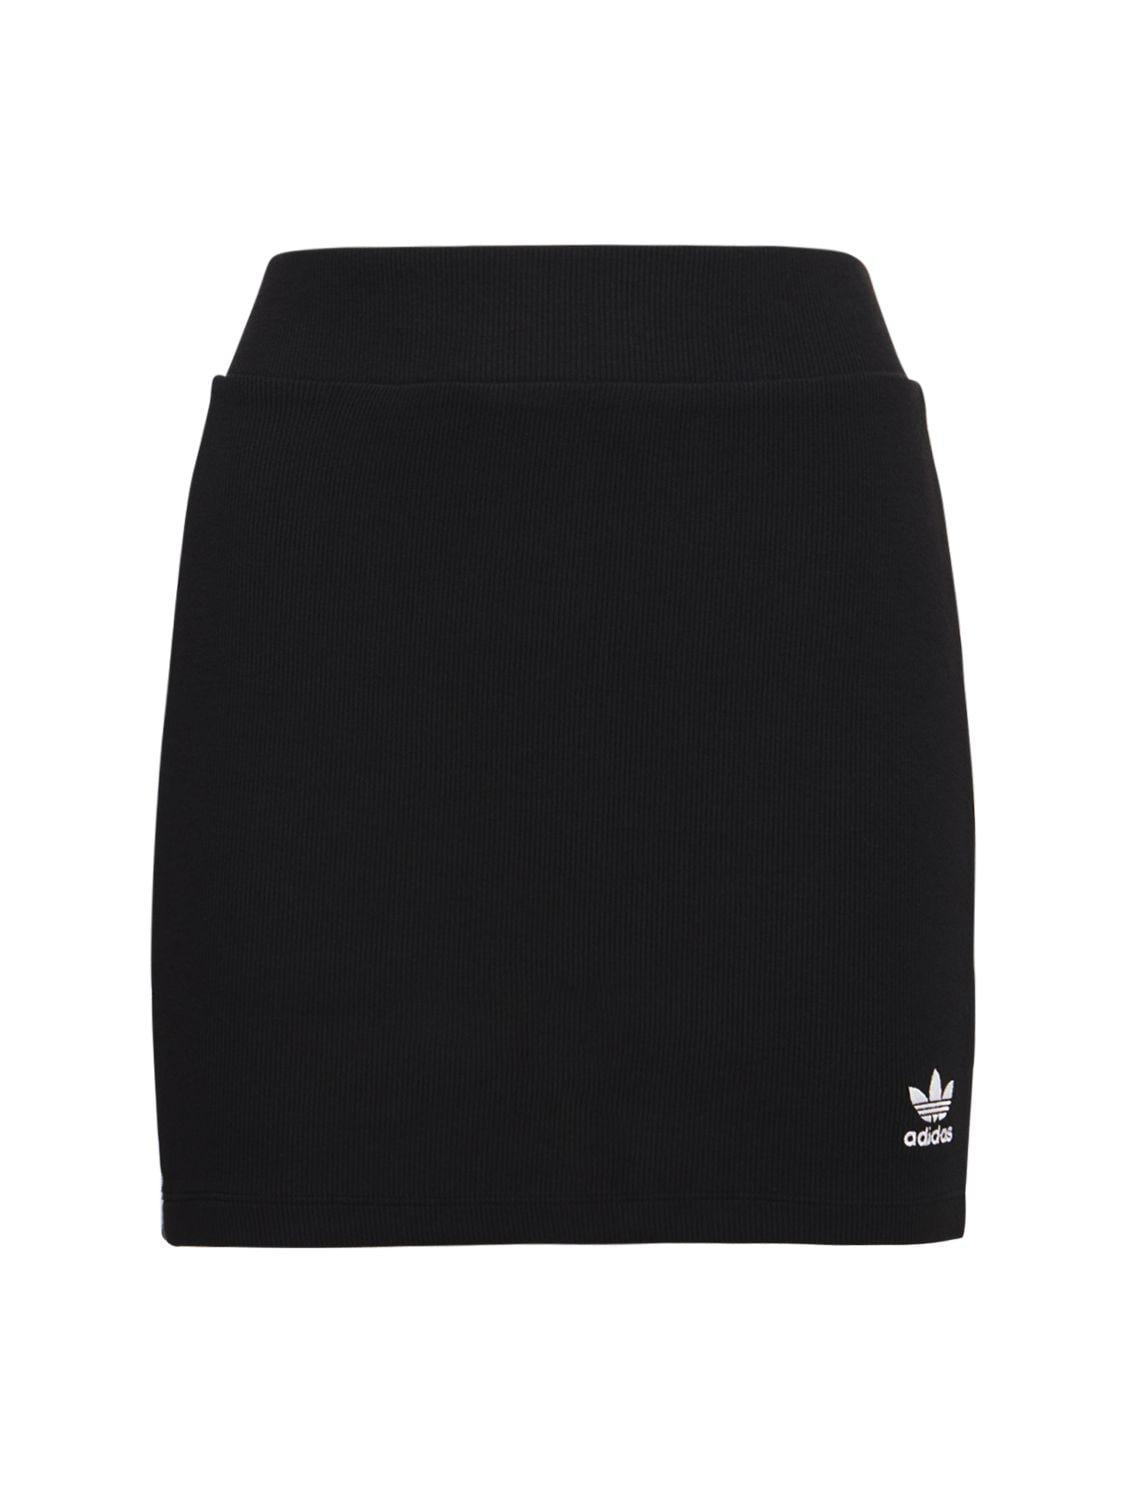 adidas Originals 3 Stripes Skirt in Black | Lyst